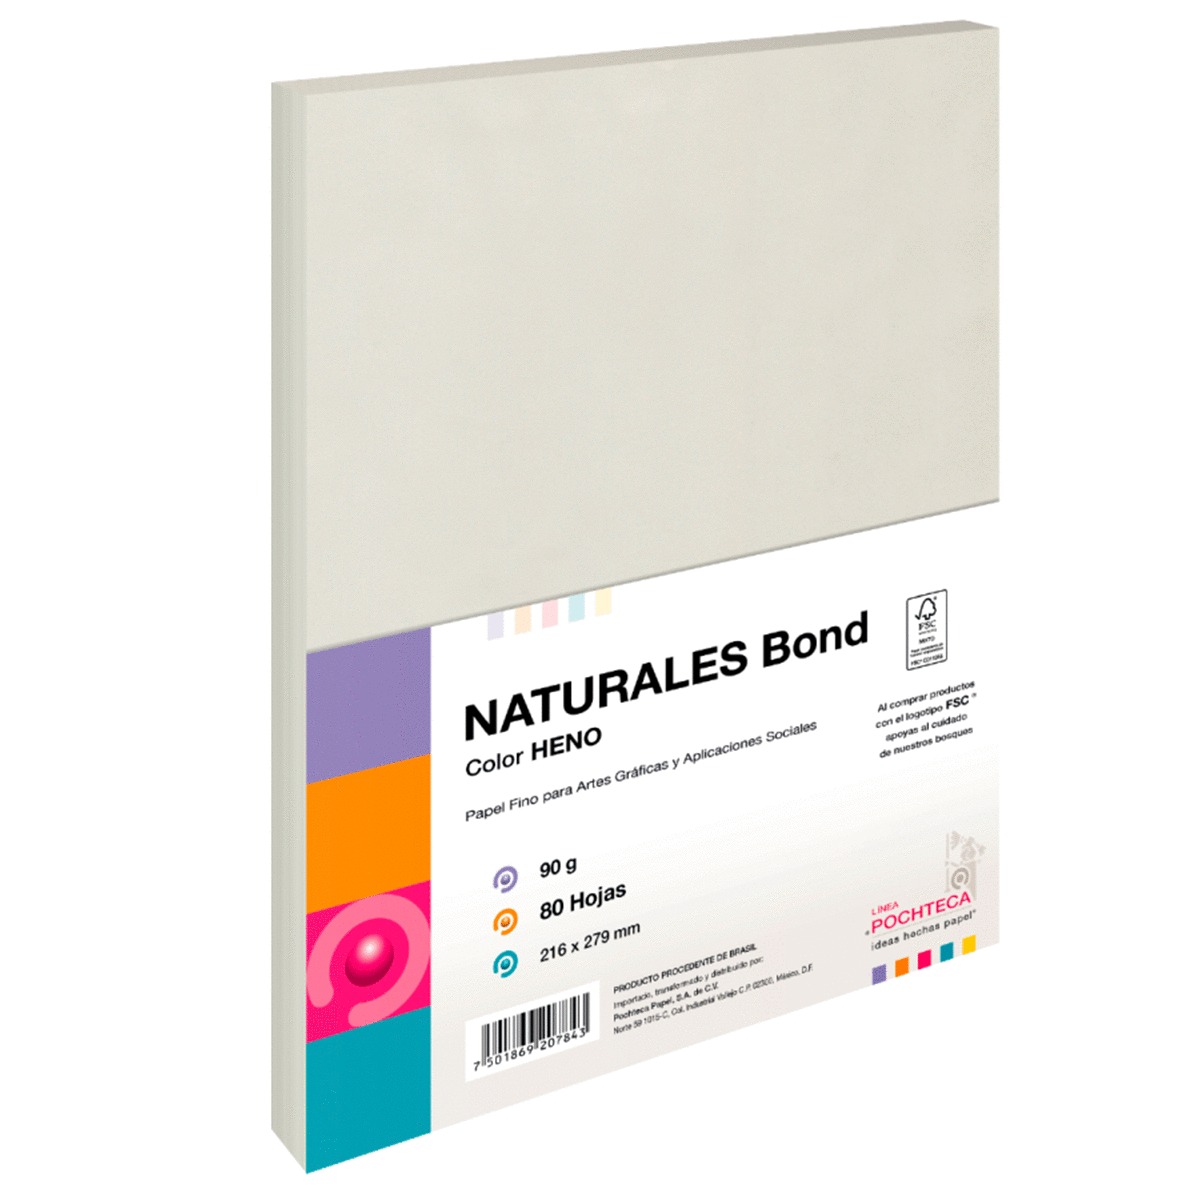 Papel Fino Pochteca Naturales Bond / Paquete 80 hojas / Carta / Heno / 90 gr